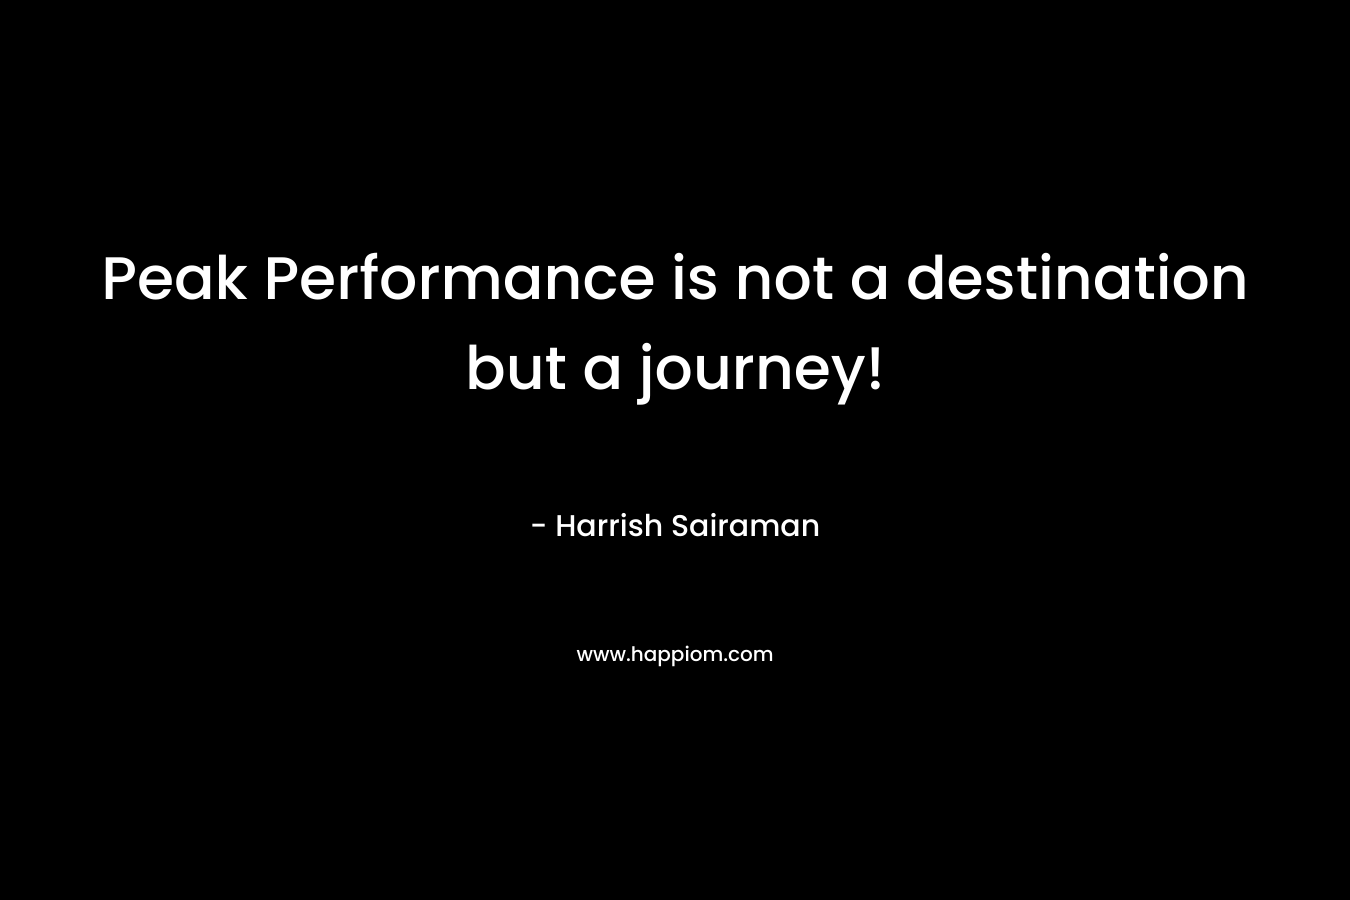 Peak Performance is not a destination but a journey! – Harrish Sairaman